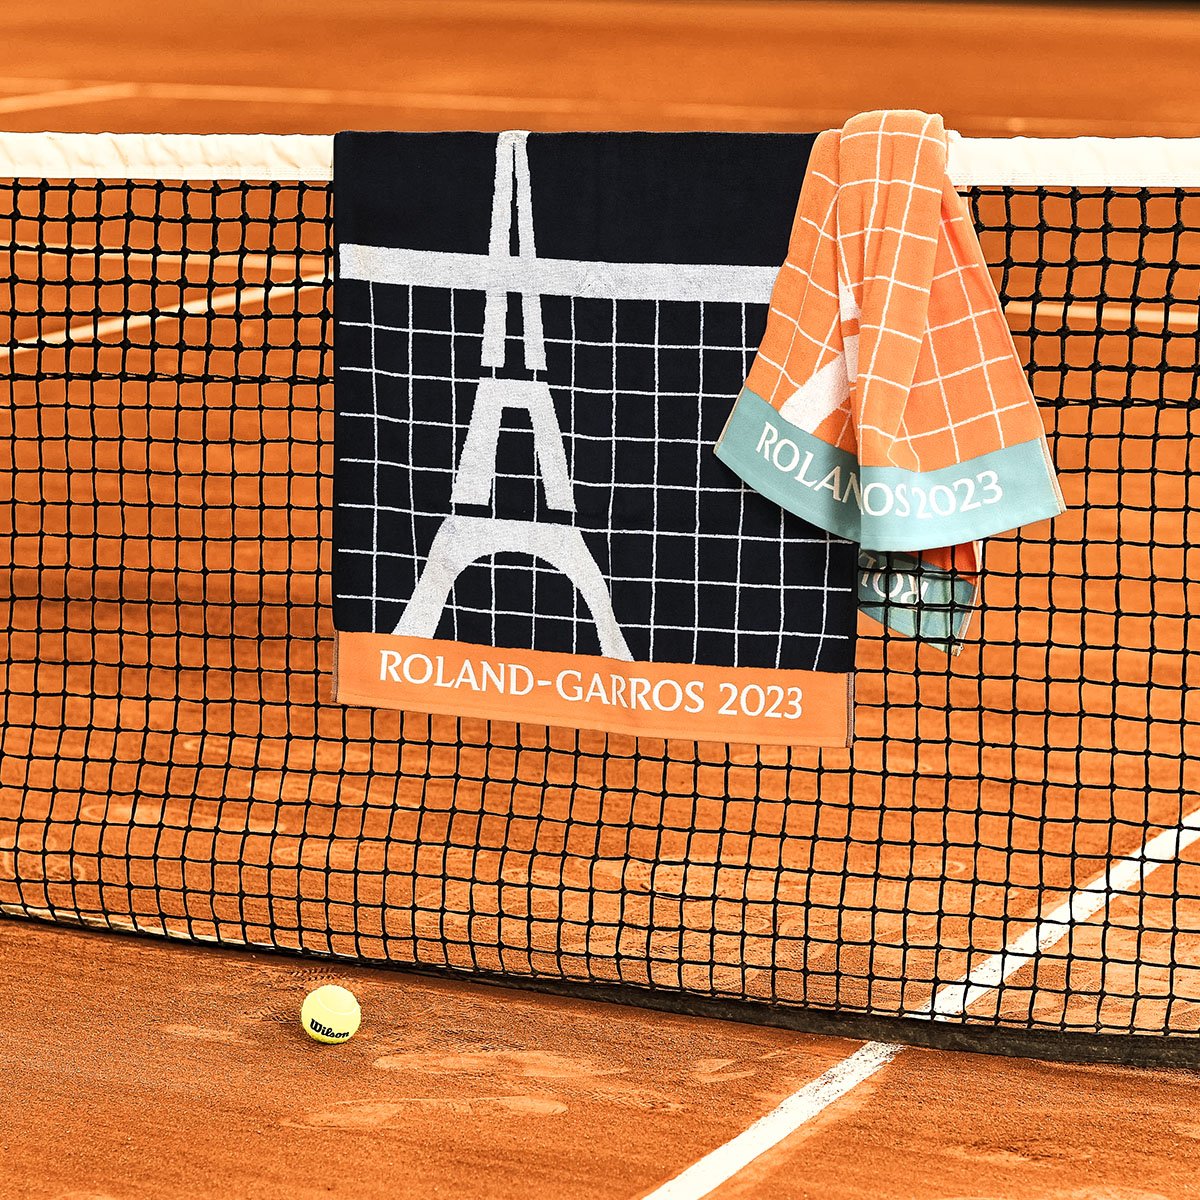 Roland Garros 2023: dates and tickets - Slazenger Heritage